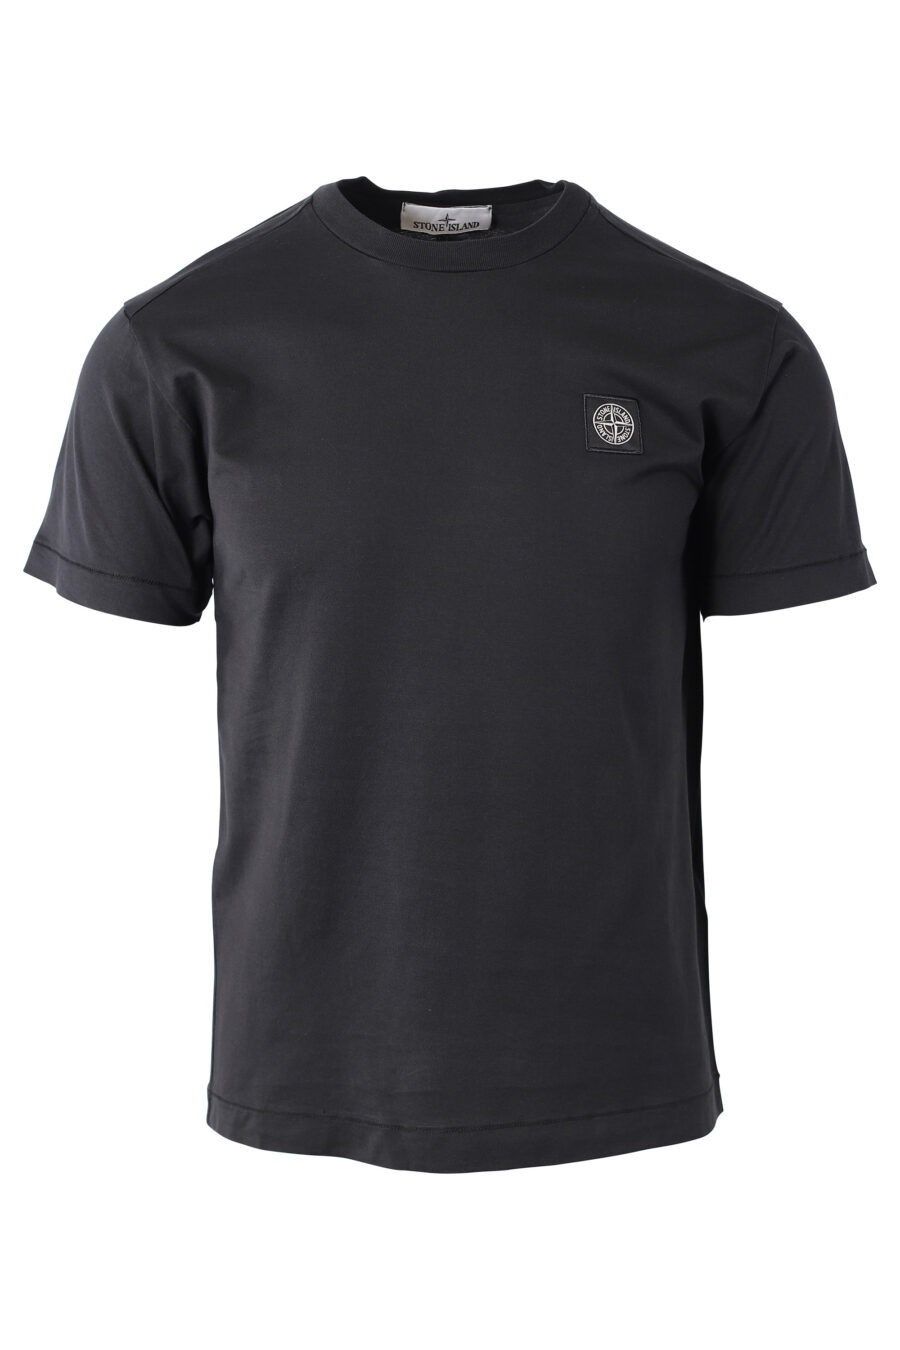 T-shirt noir avec mini patch logo - IMG 1133